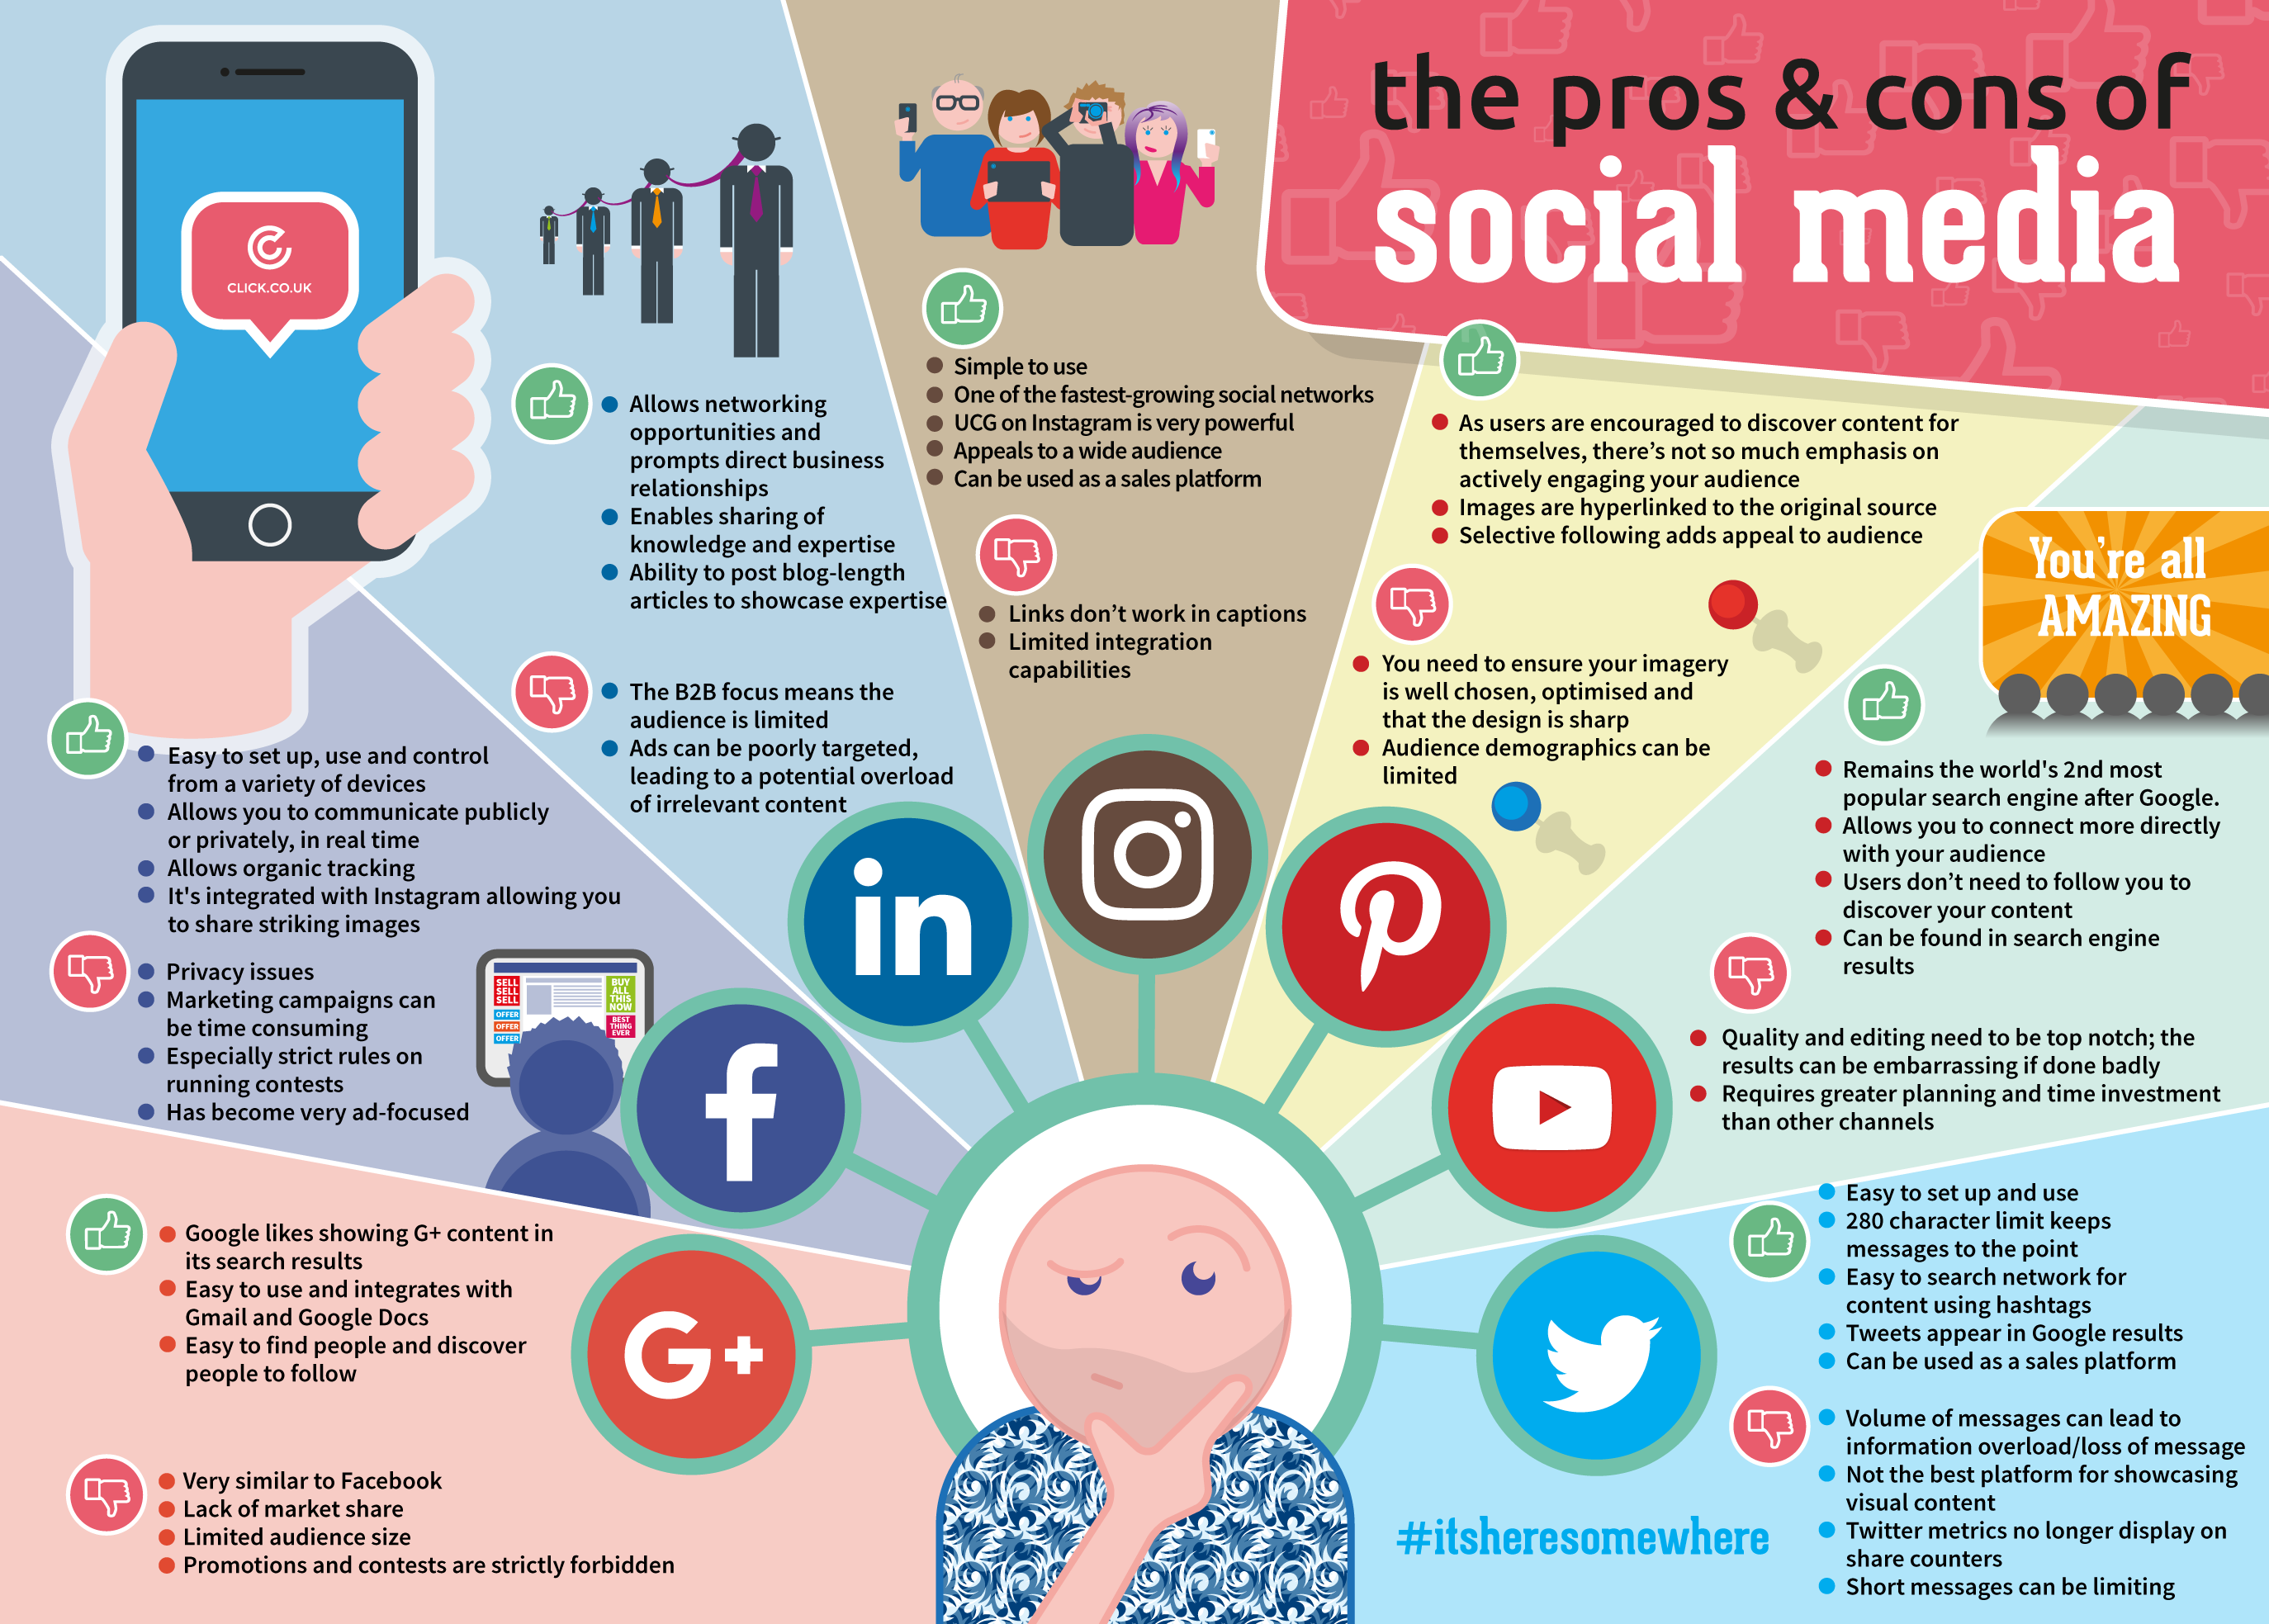 Social-media-pros-cons-2017-2 (1)